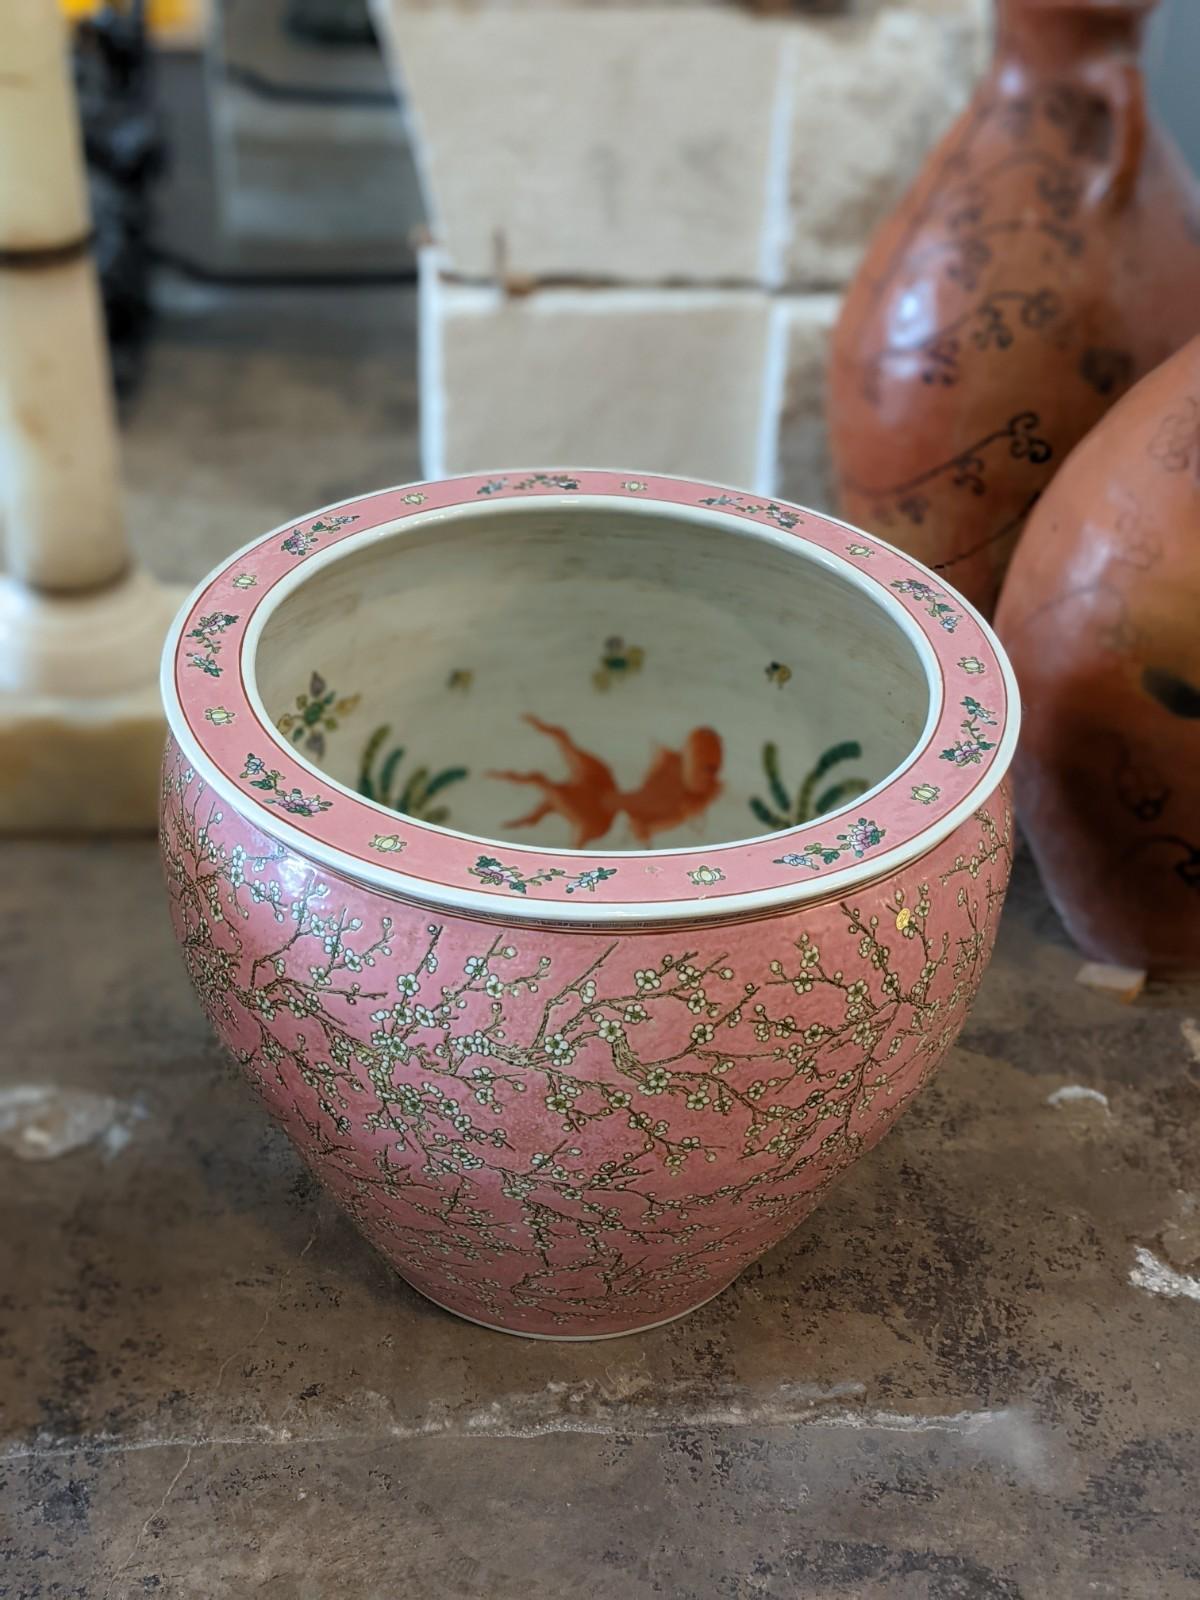 Those Porcelain fish bowls origins from China, circa 1970.
 